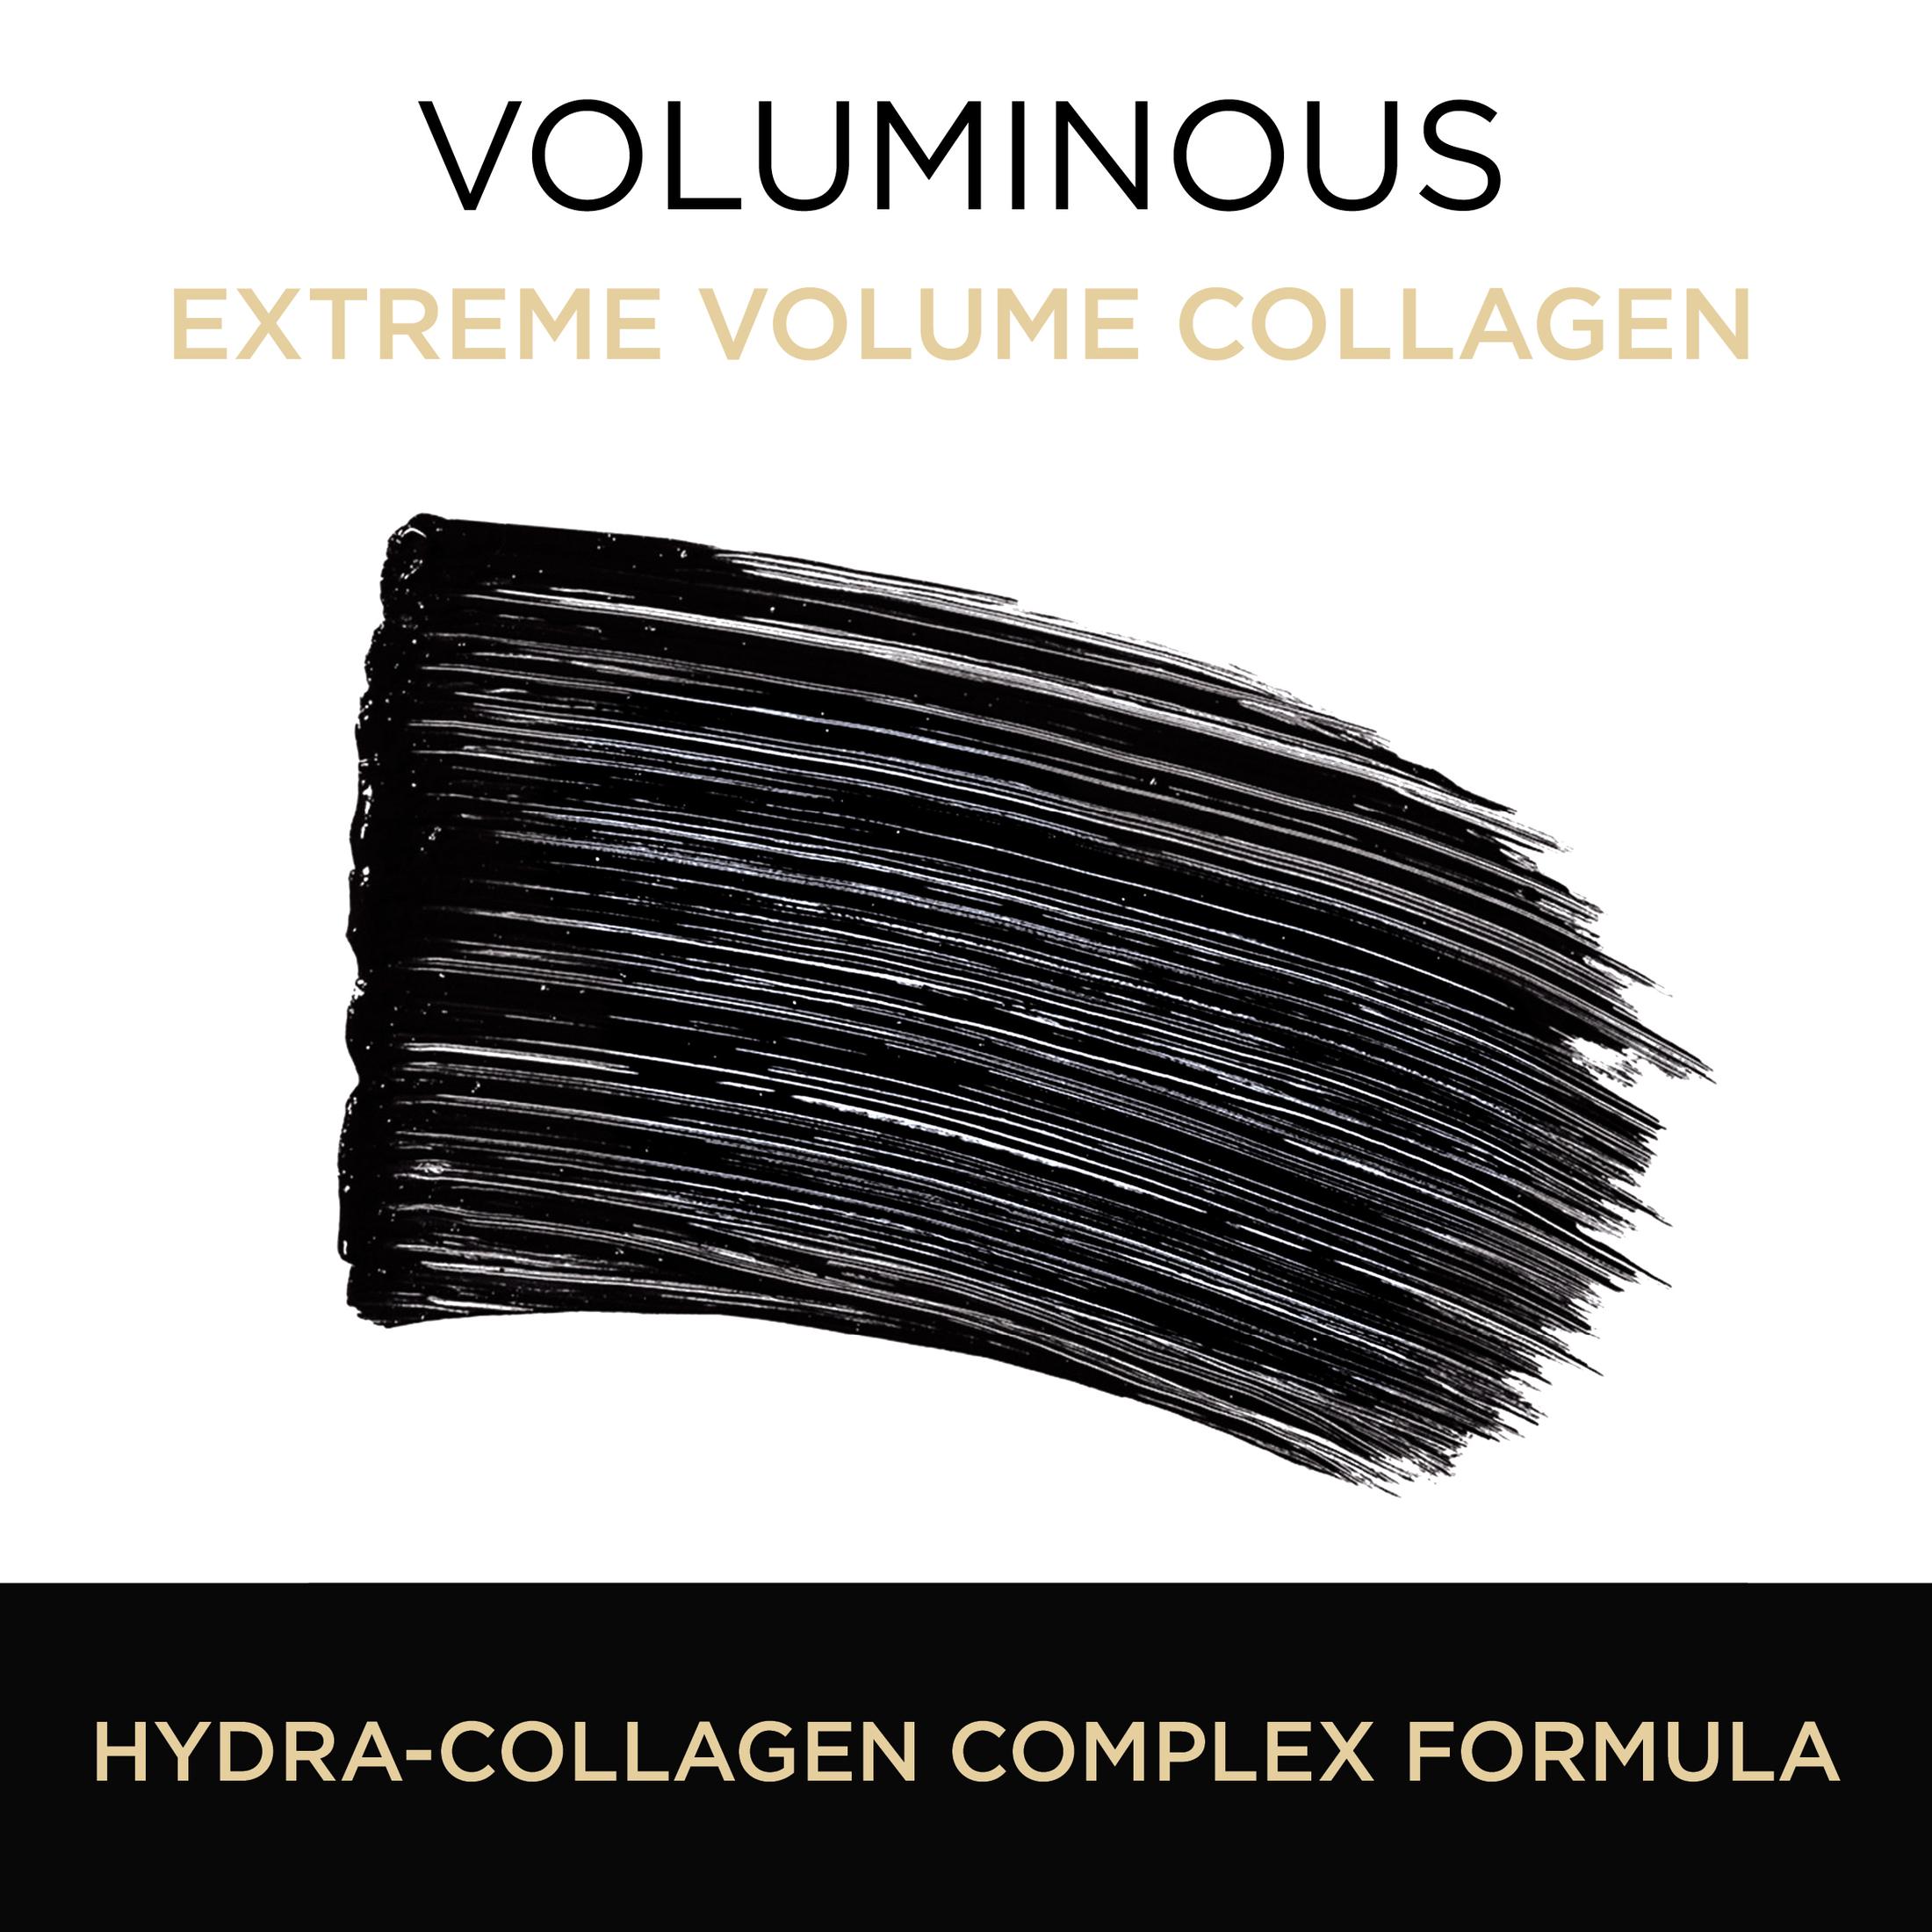 L'Oreal Paris Voluminous Extra Volume Collagen Washable Mascara, 680 Blackest Black - image 3 of 6